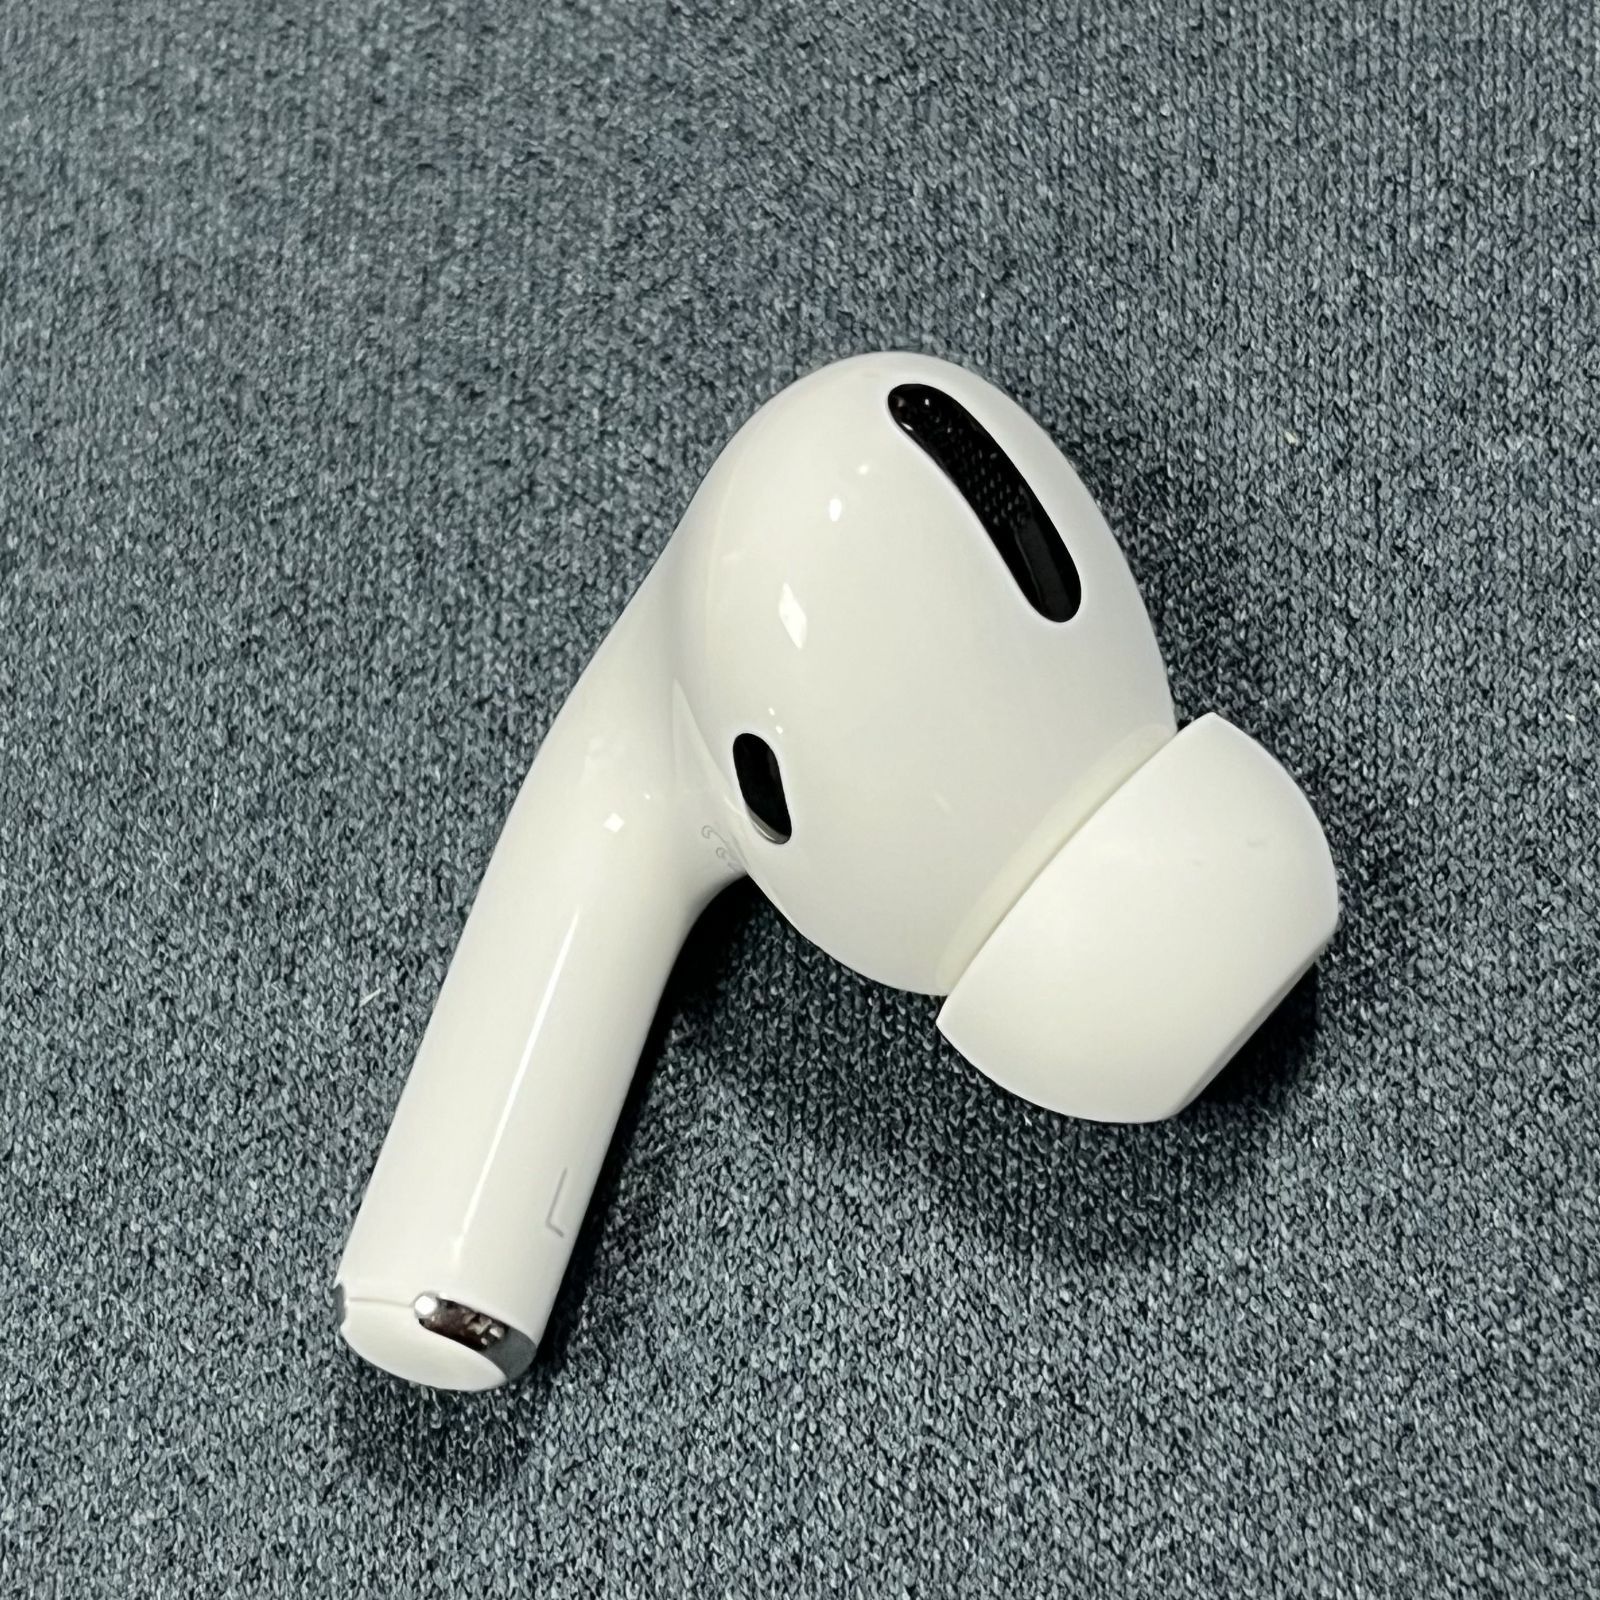 AirPods Pro (第1世代) 左耳（L片耳）のみ 新品 Apple - メルカリ